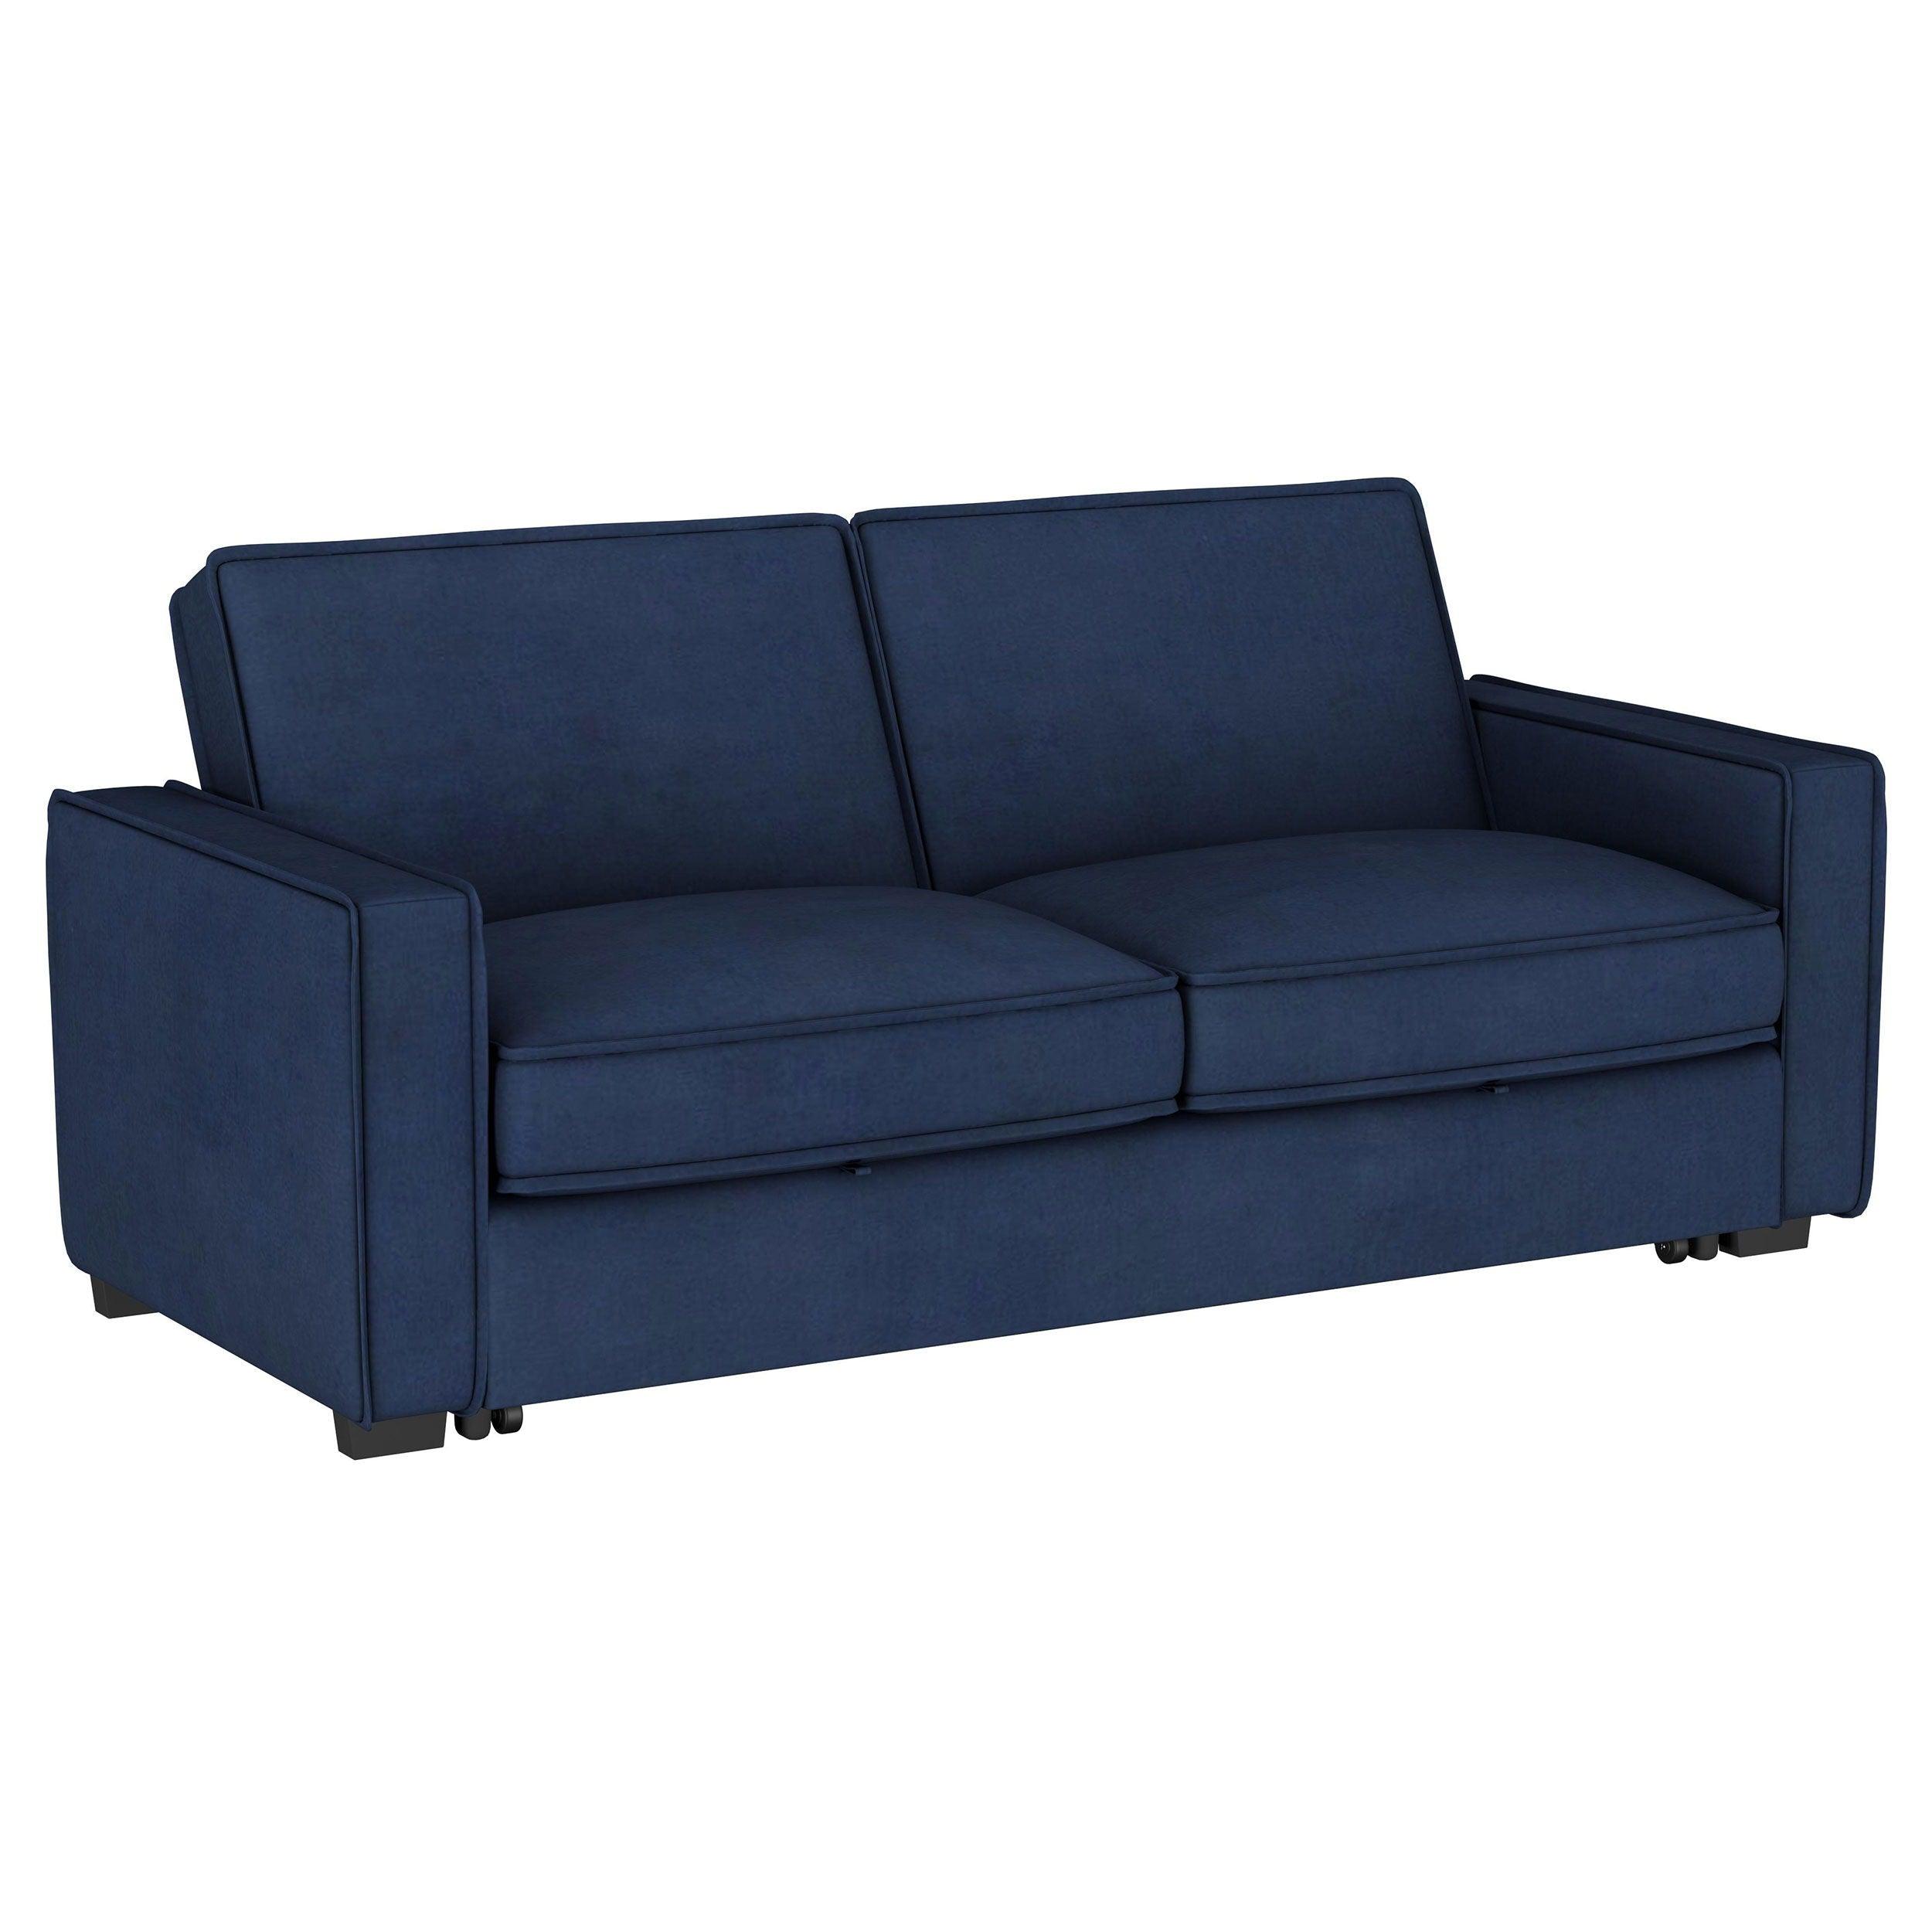 Coaster Fine Furniture - Gretchen - Multipurpose Upholstered Convertible Sleeper Sofa Bed - Navy Blue - 5th Avenue Furniture